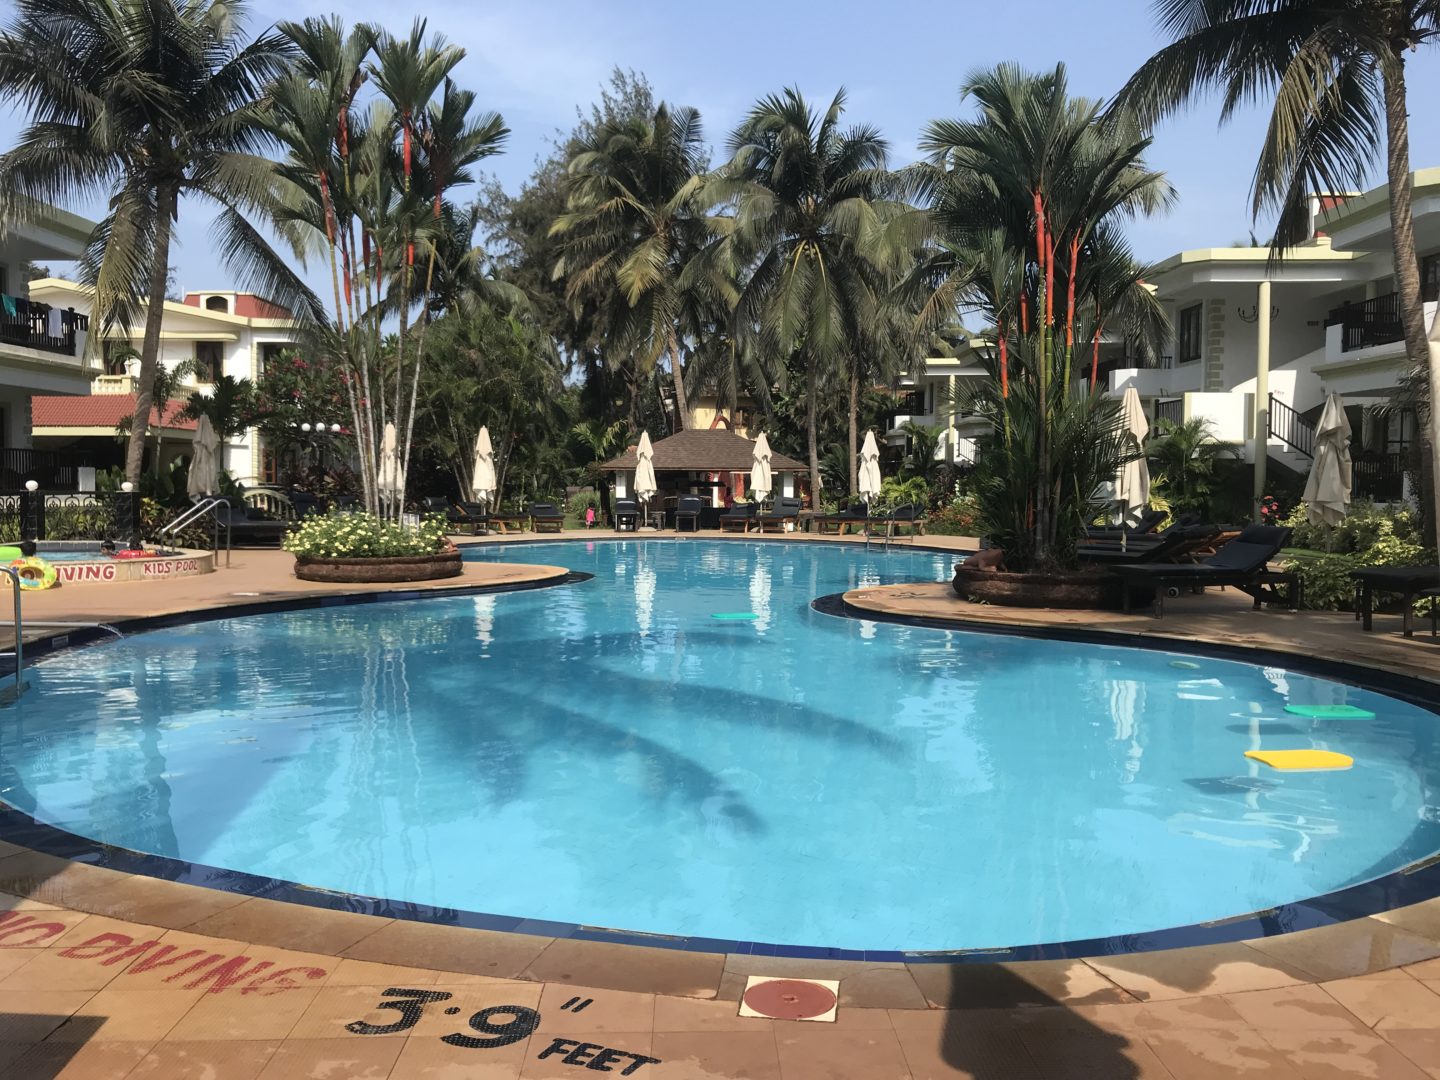 SONESTA INNS in Goa - Hotel Review with Photos